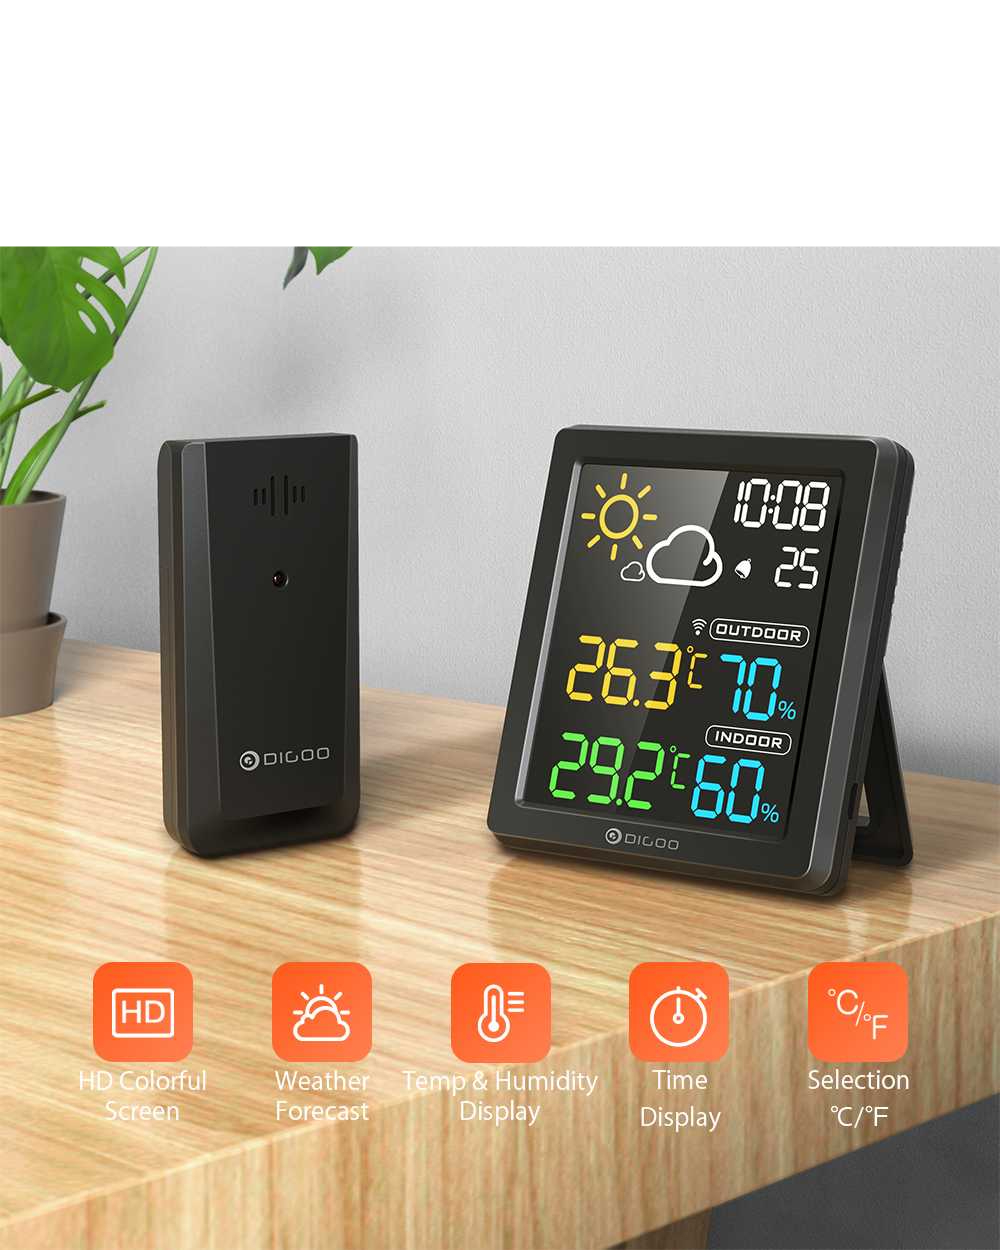 DIGOO DG-8647 Mini Colorful HD Screen LCD Weather Station Alarm Clock Smart Hygrometer Thermometer Snooze Dual Desktop Clock